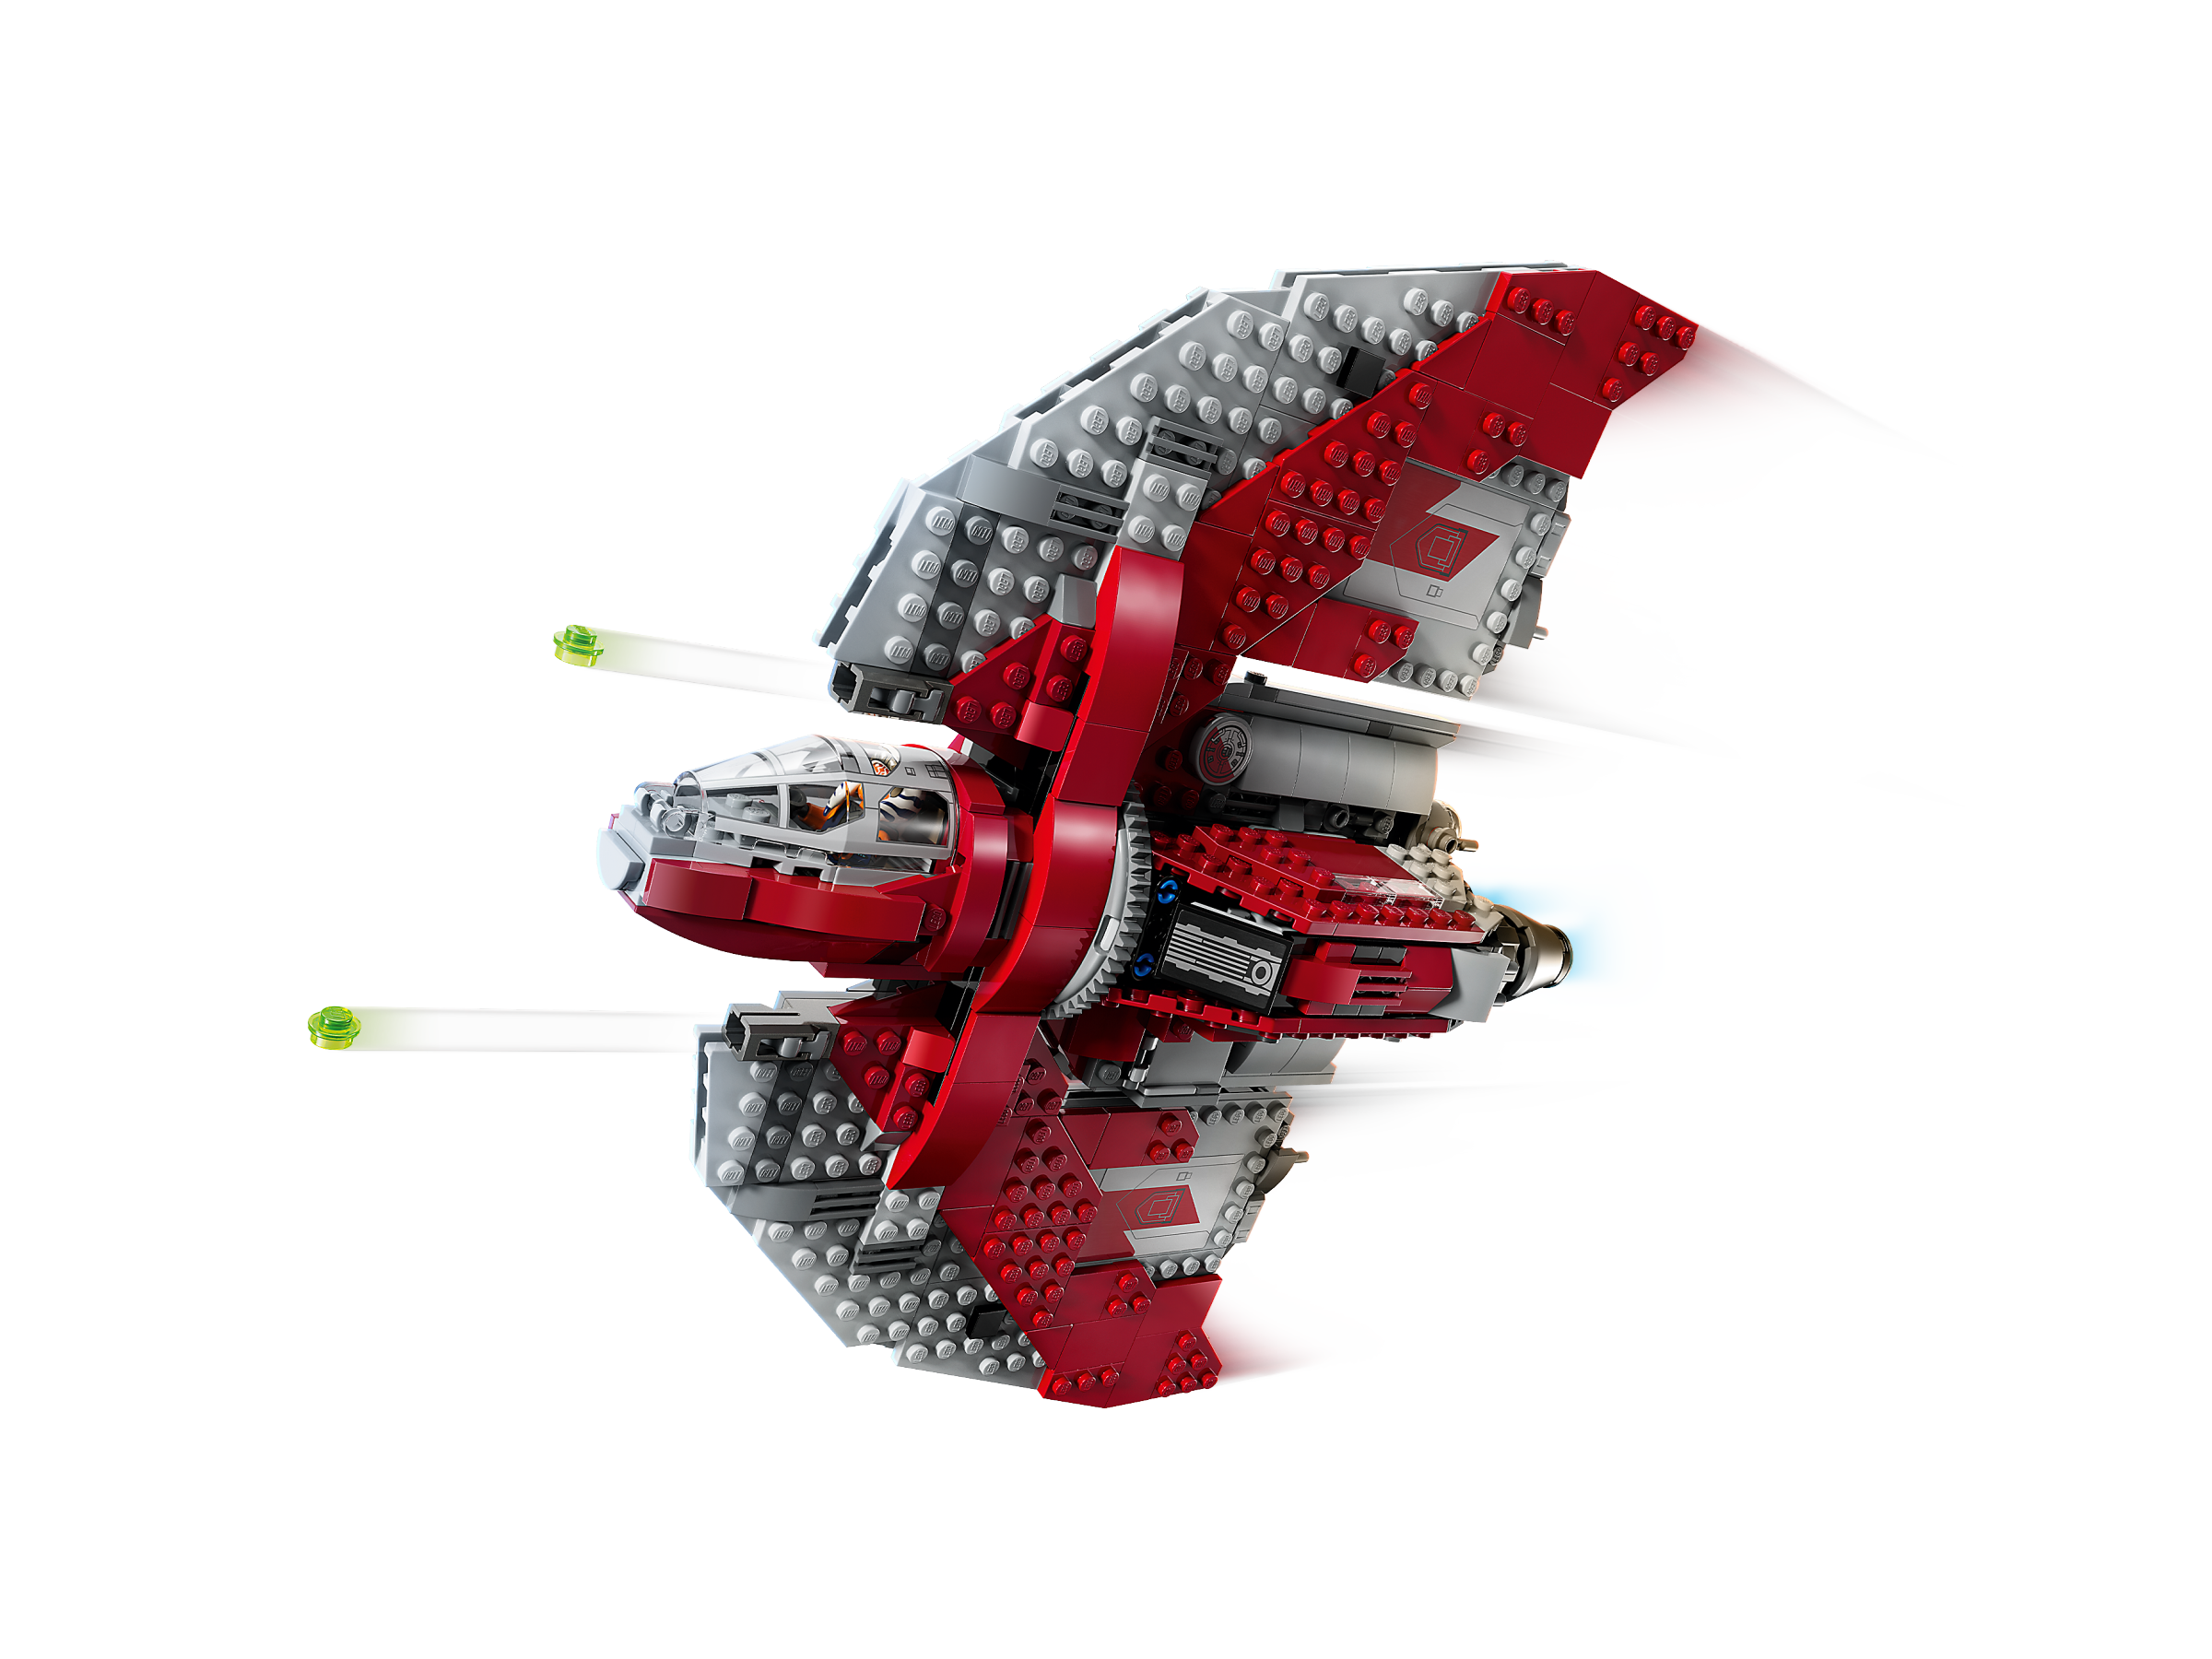 LEGO® 75362 Ahsoka Tano's T-6 Jedi shuttle - ToyPro